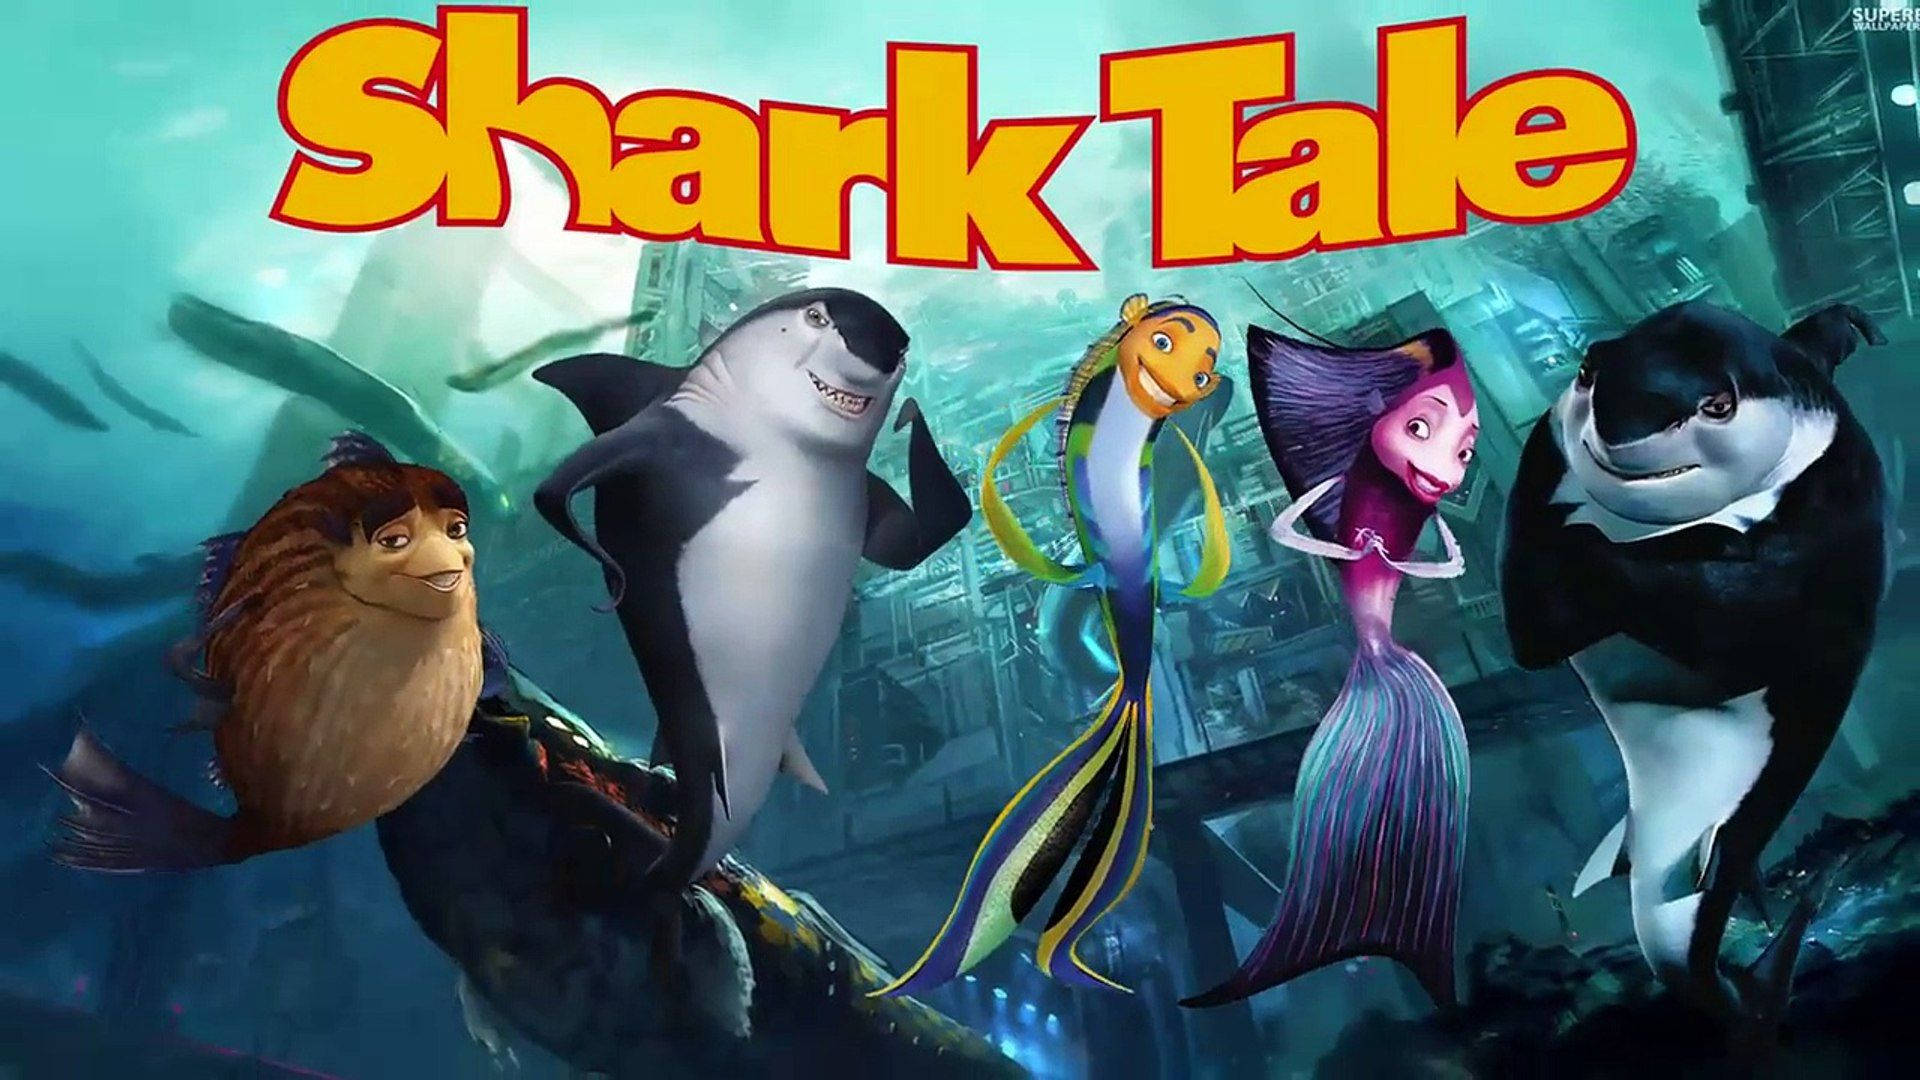 shark tales characters names